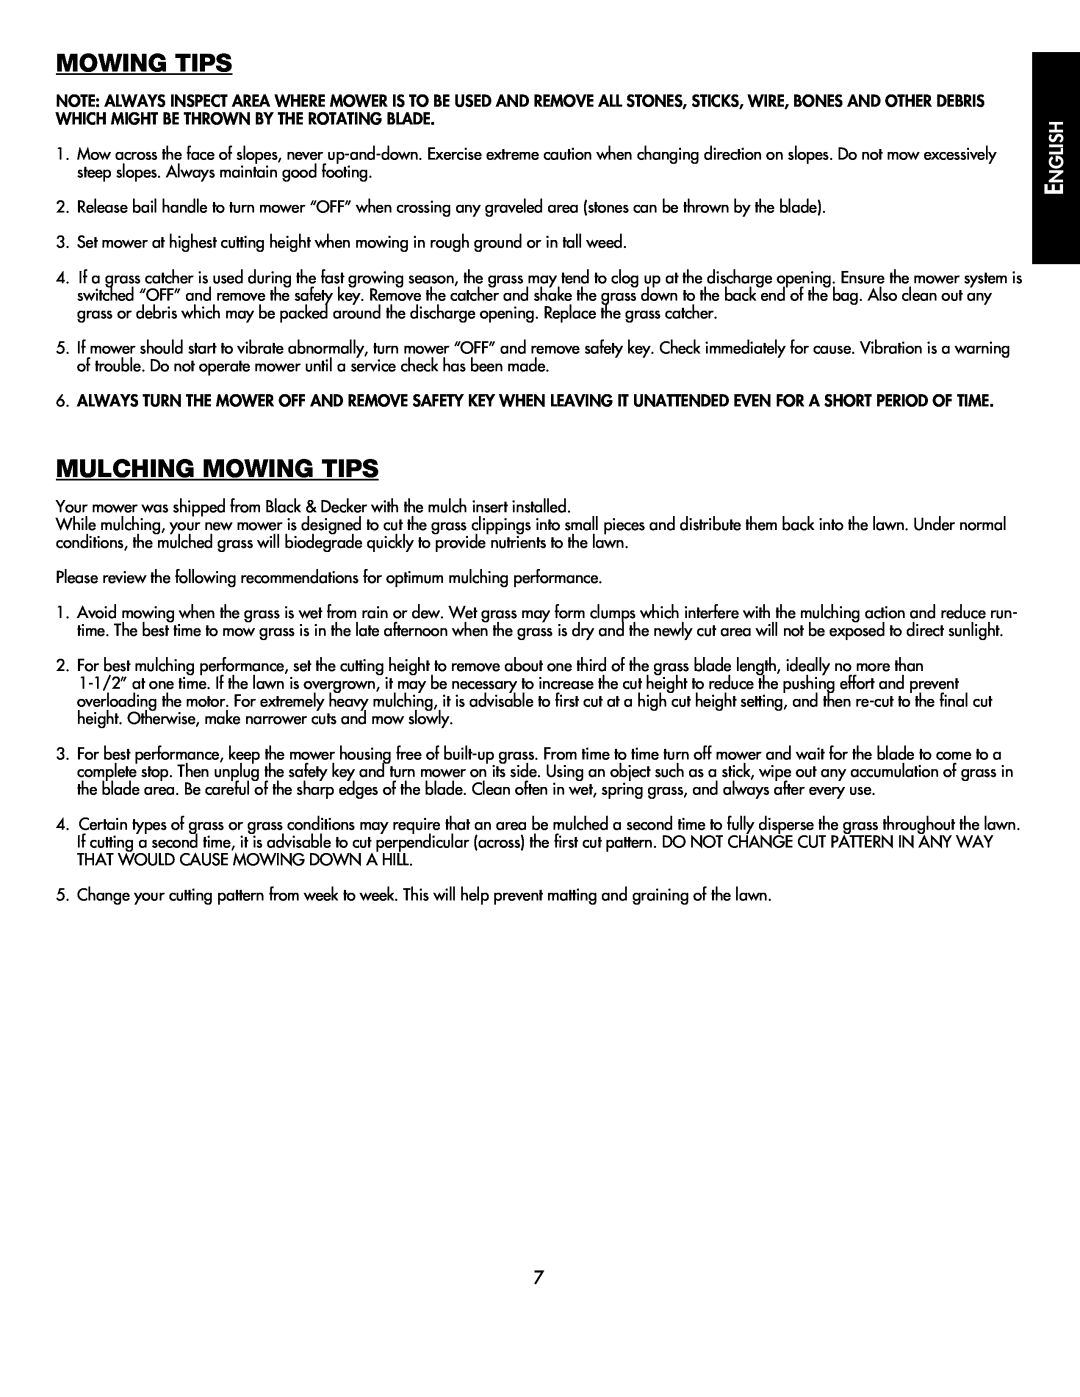 Black & Decker CMM1000 instruction manual Mulching Mowing Tips, English 